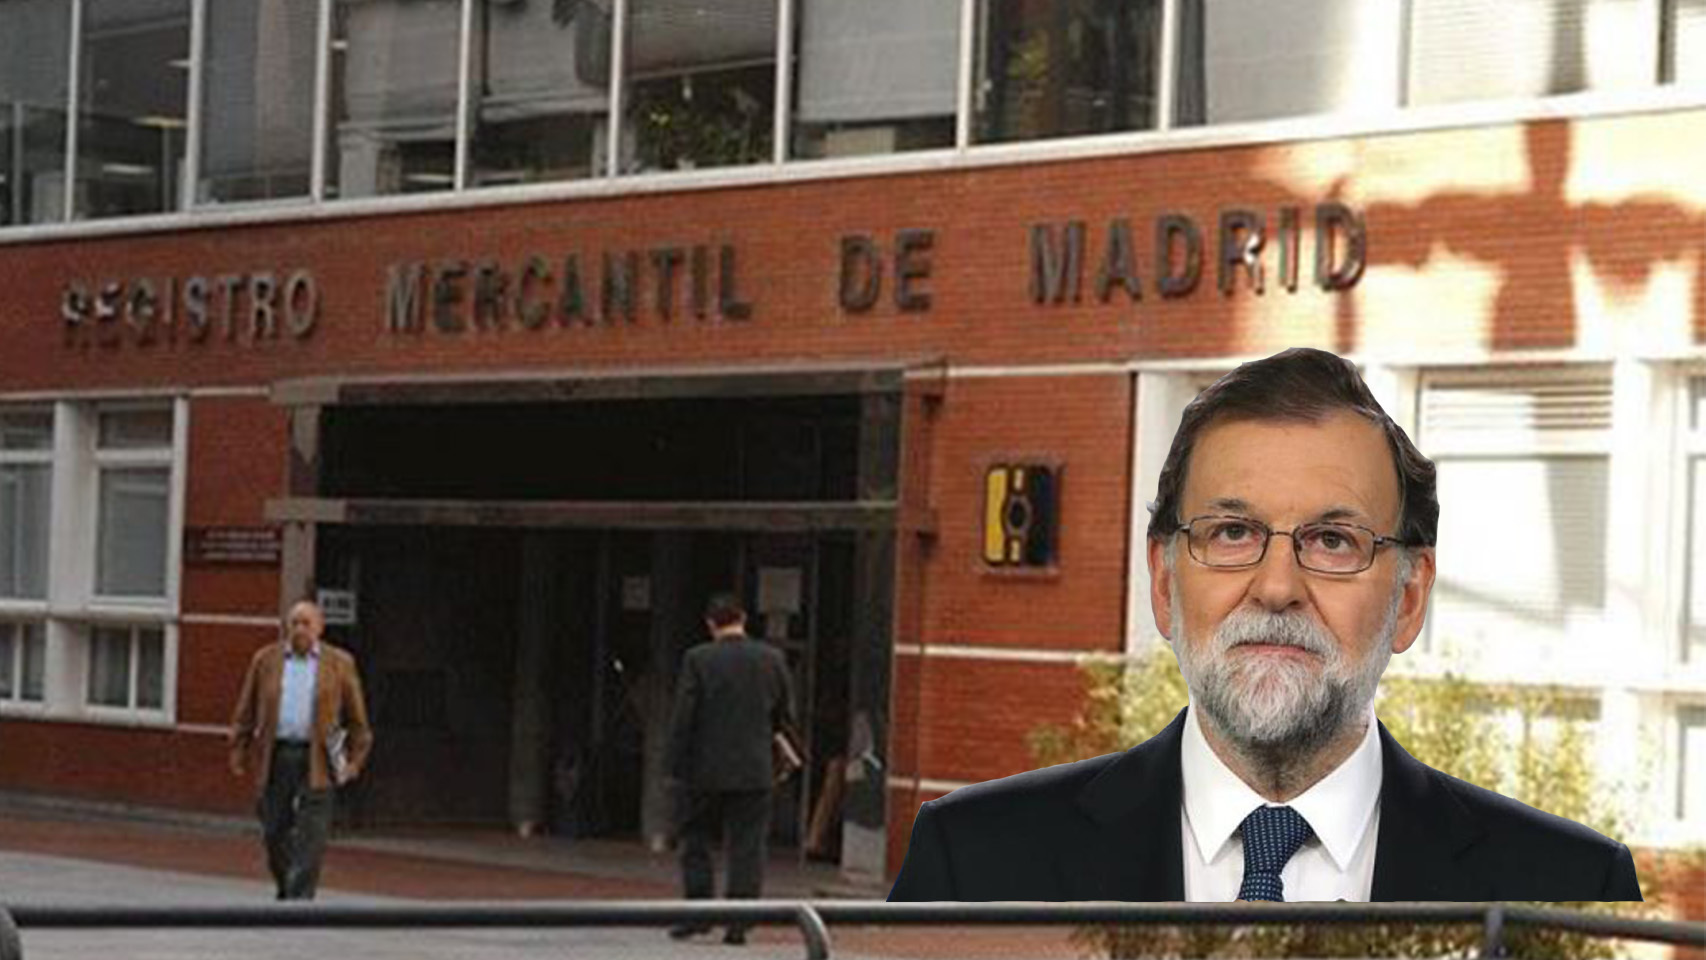 Registro Mercantil de Madrid